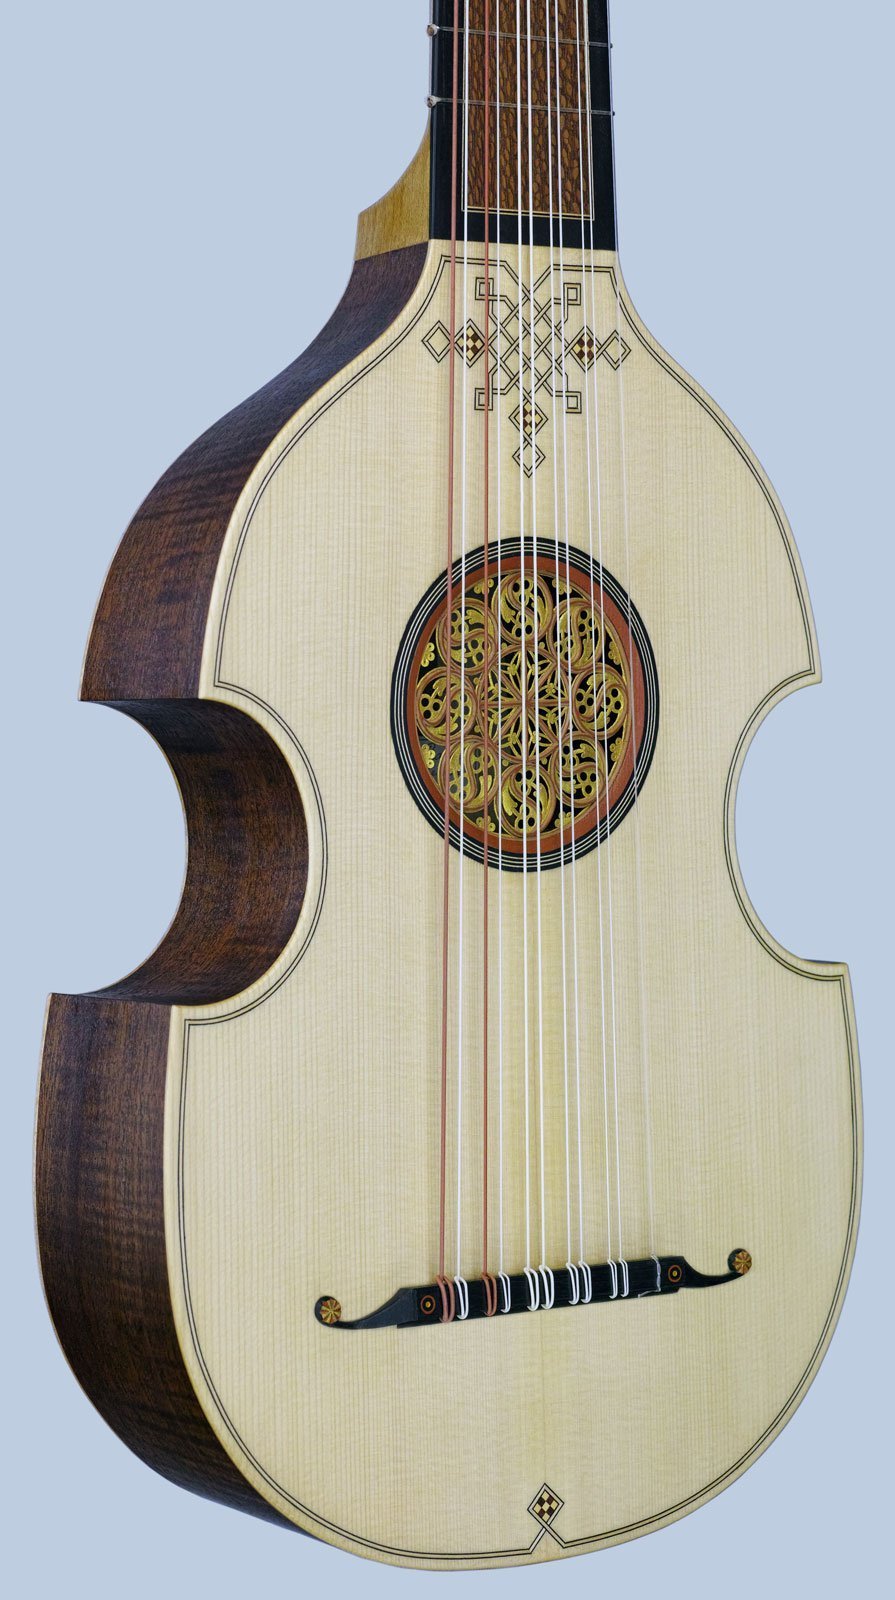 Vihuela de mano, plucked Italian vioal after dai Libri painting, full soundboard view in perspective